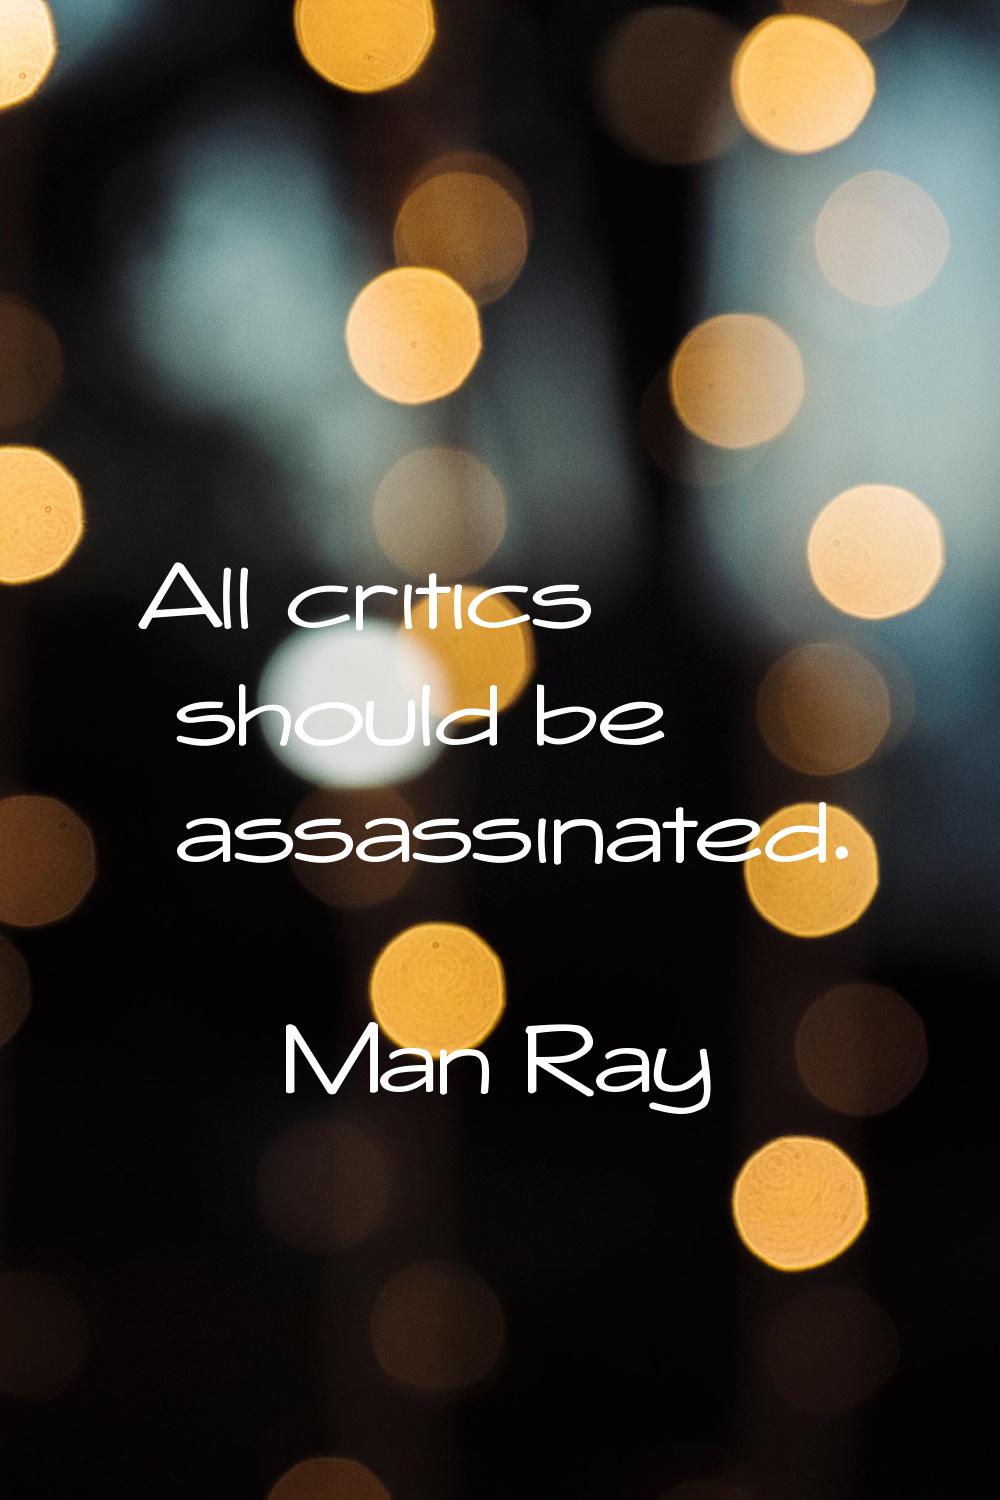 All critics should be assassinated.